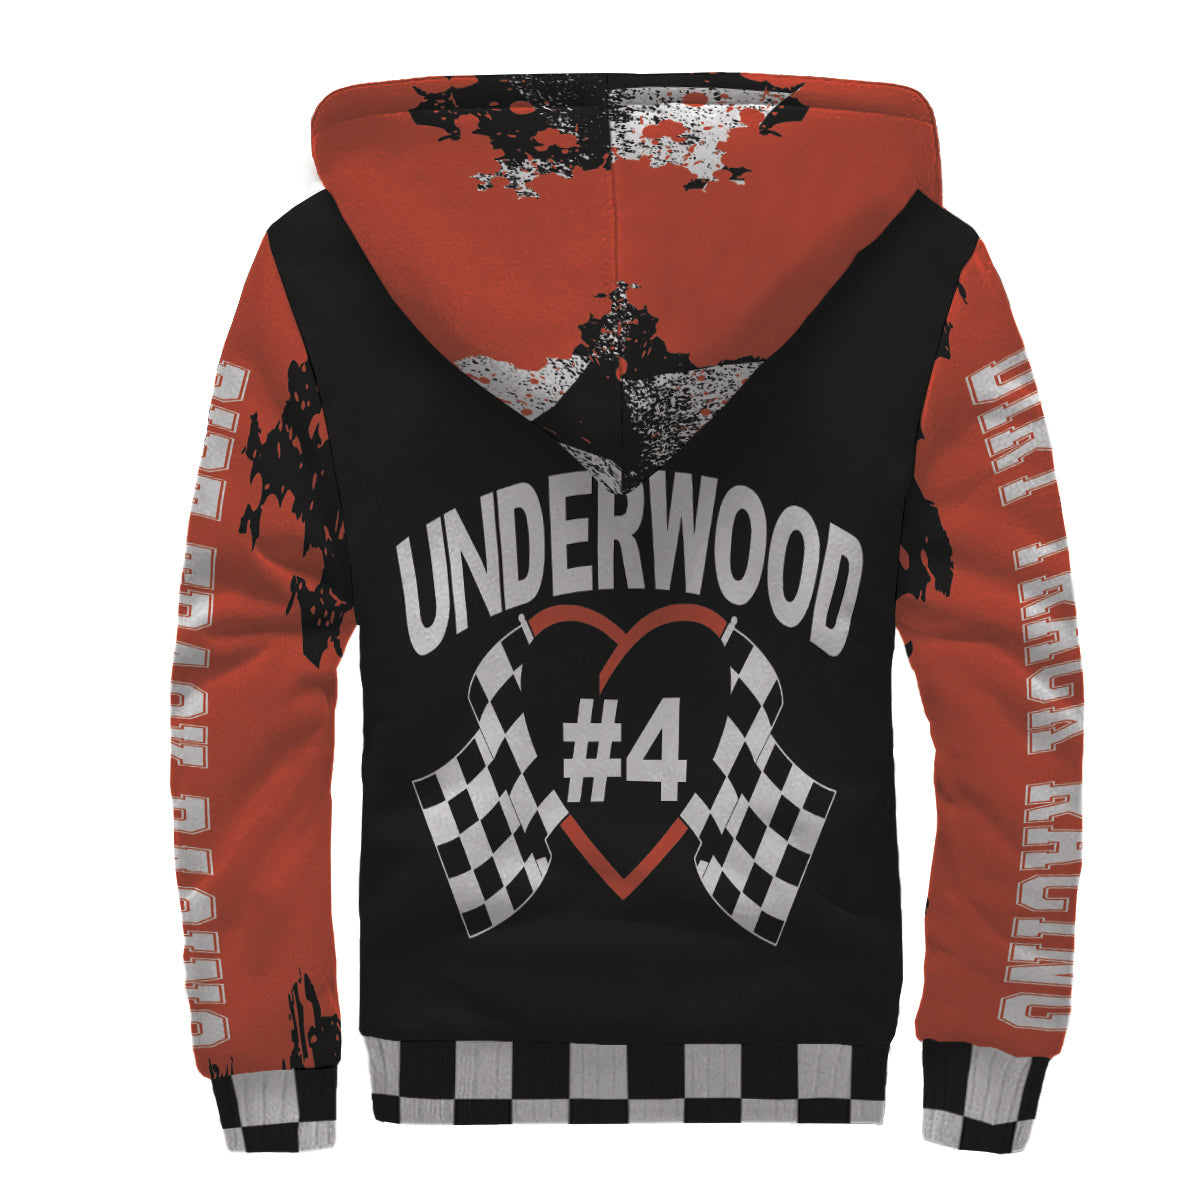 Underwood Sherpa Jacket #4